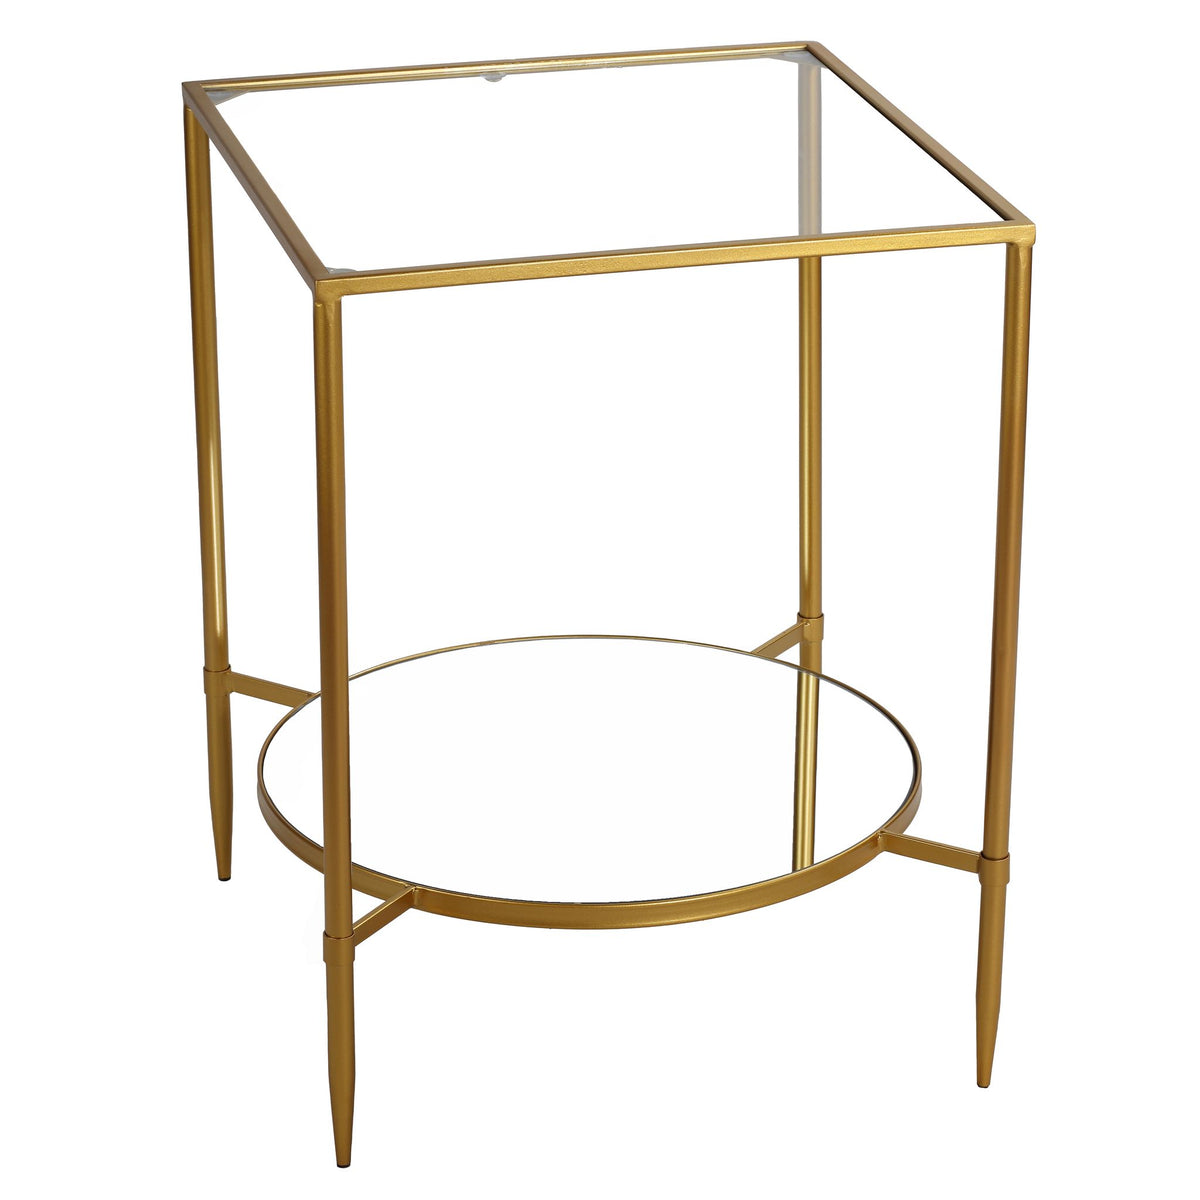 Cortesi Home Johan Square Glass End Table with Mirror Shelf, Gold Metal Frame